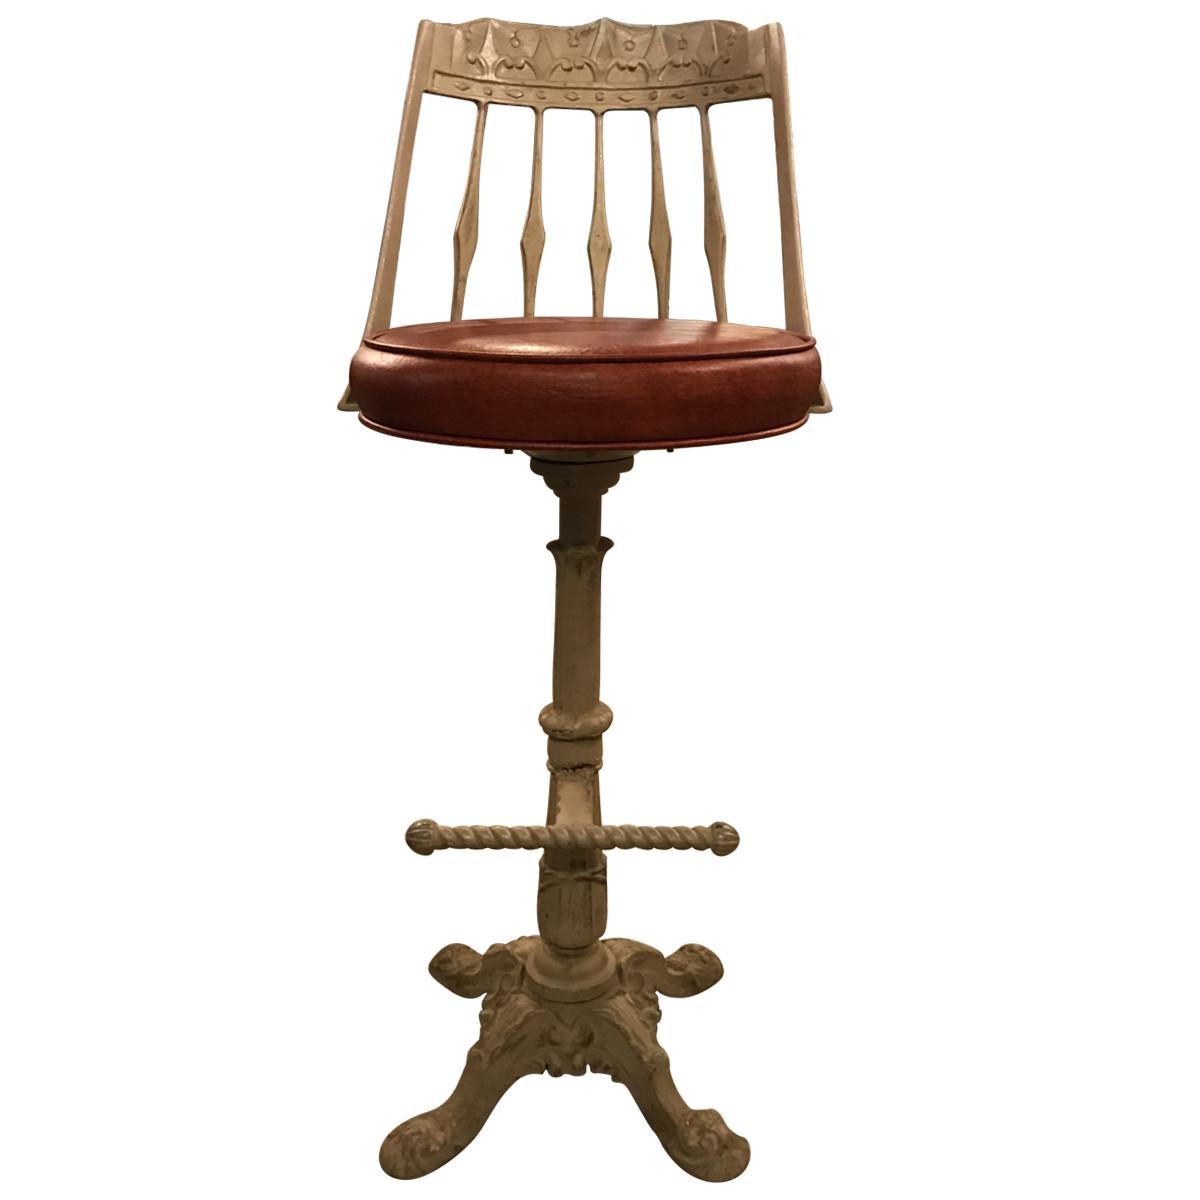 Set of four cast Iron bar stools.
